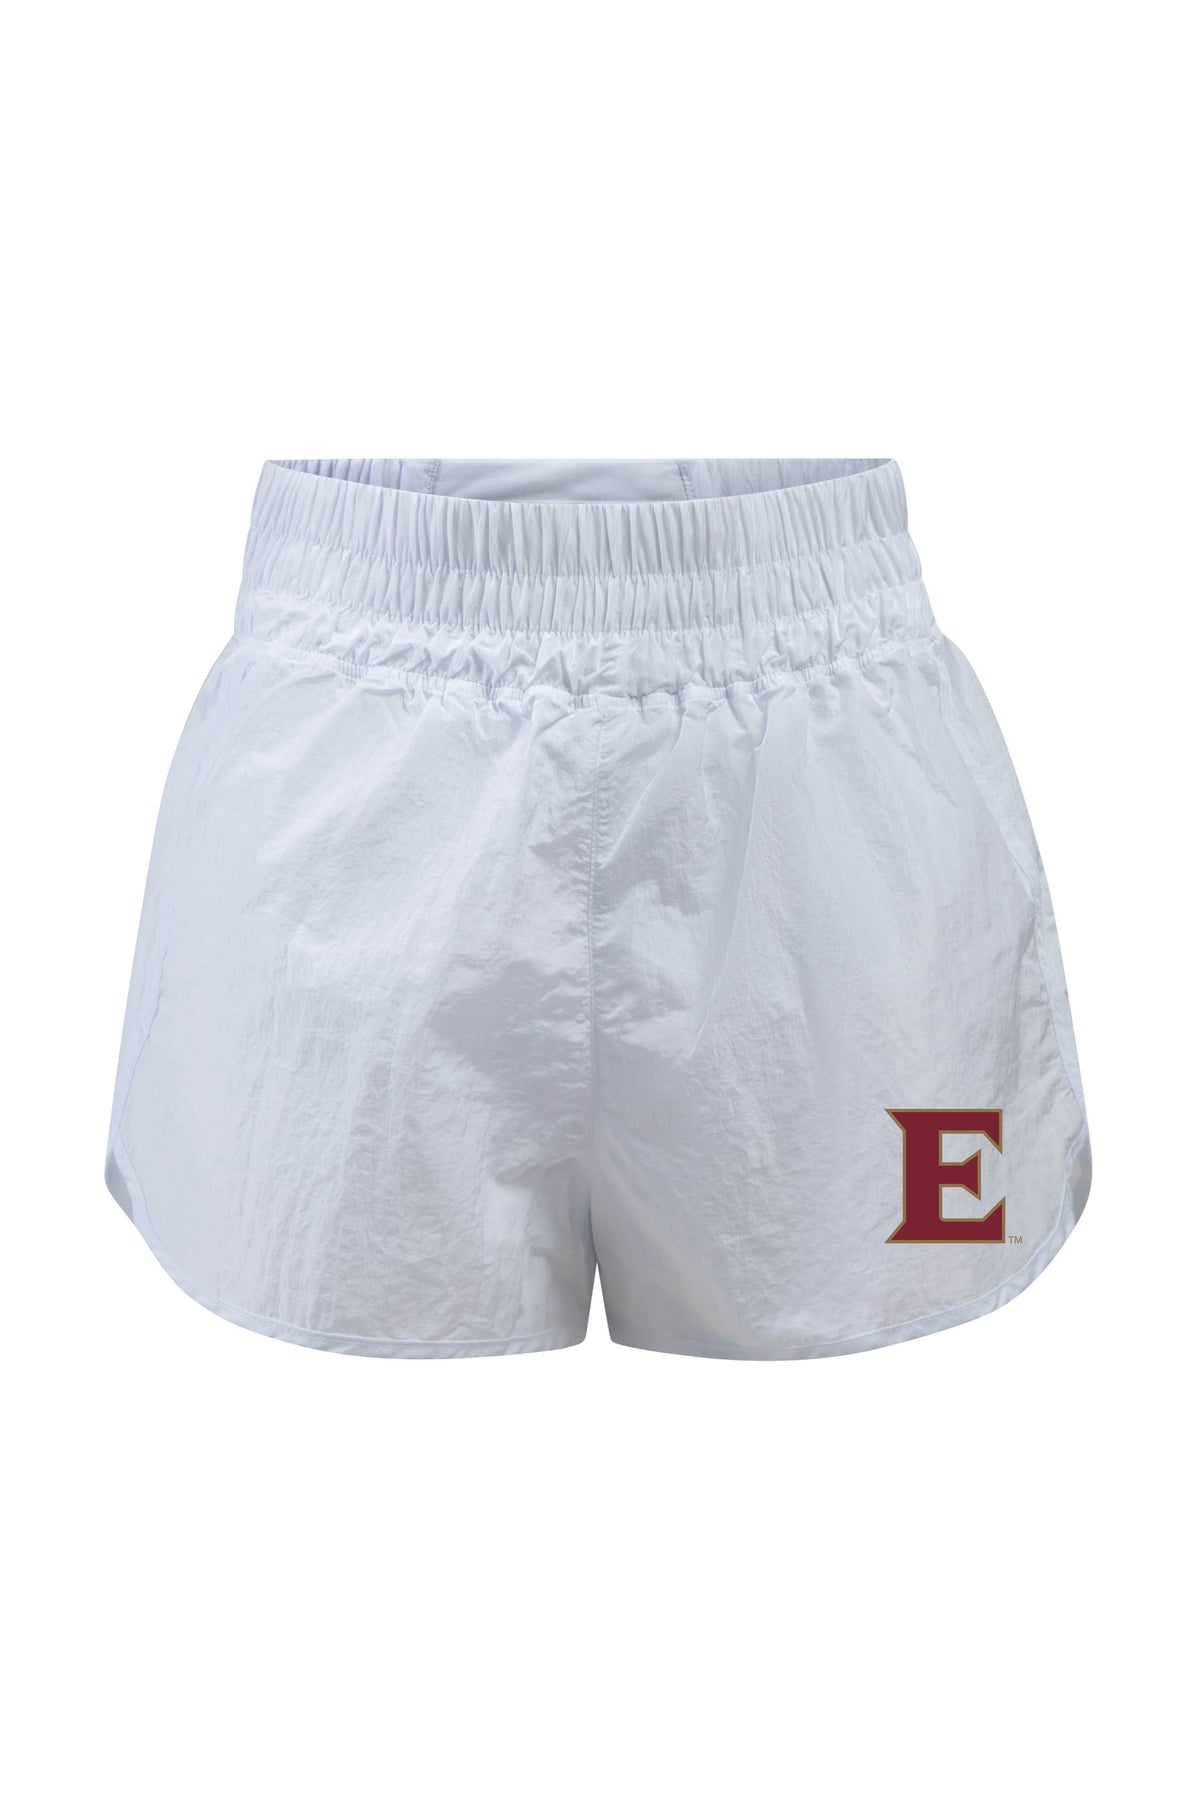 Elon University Boxer Short